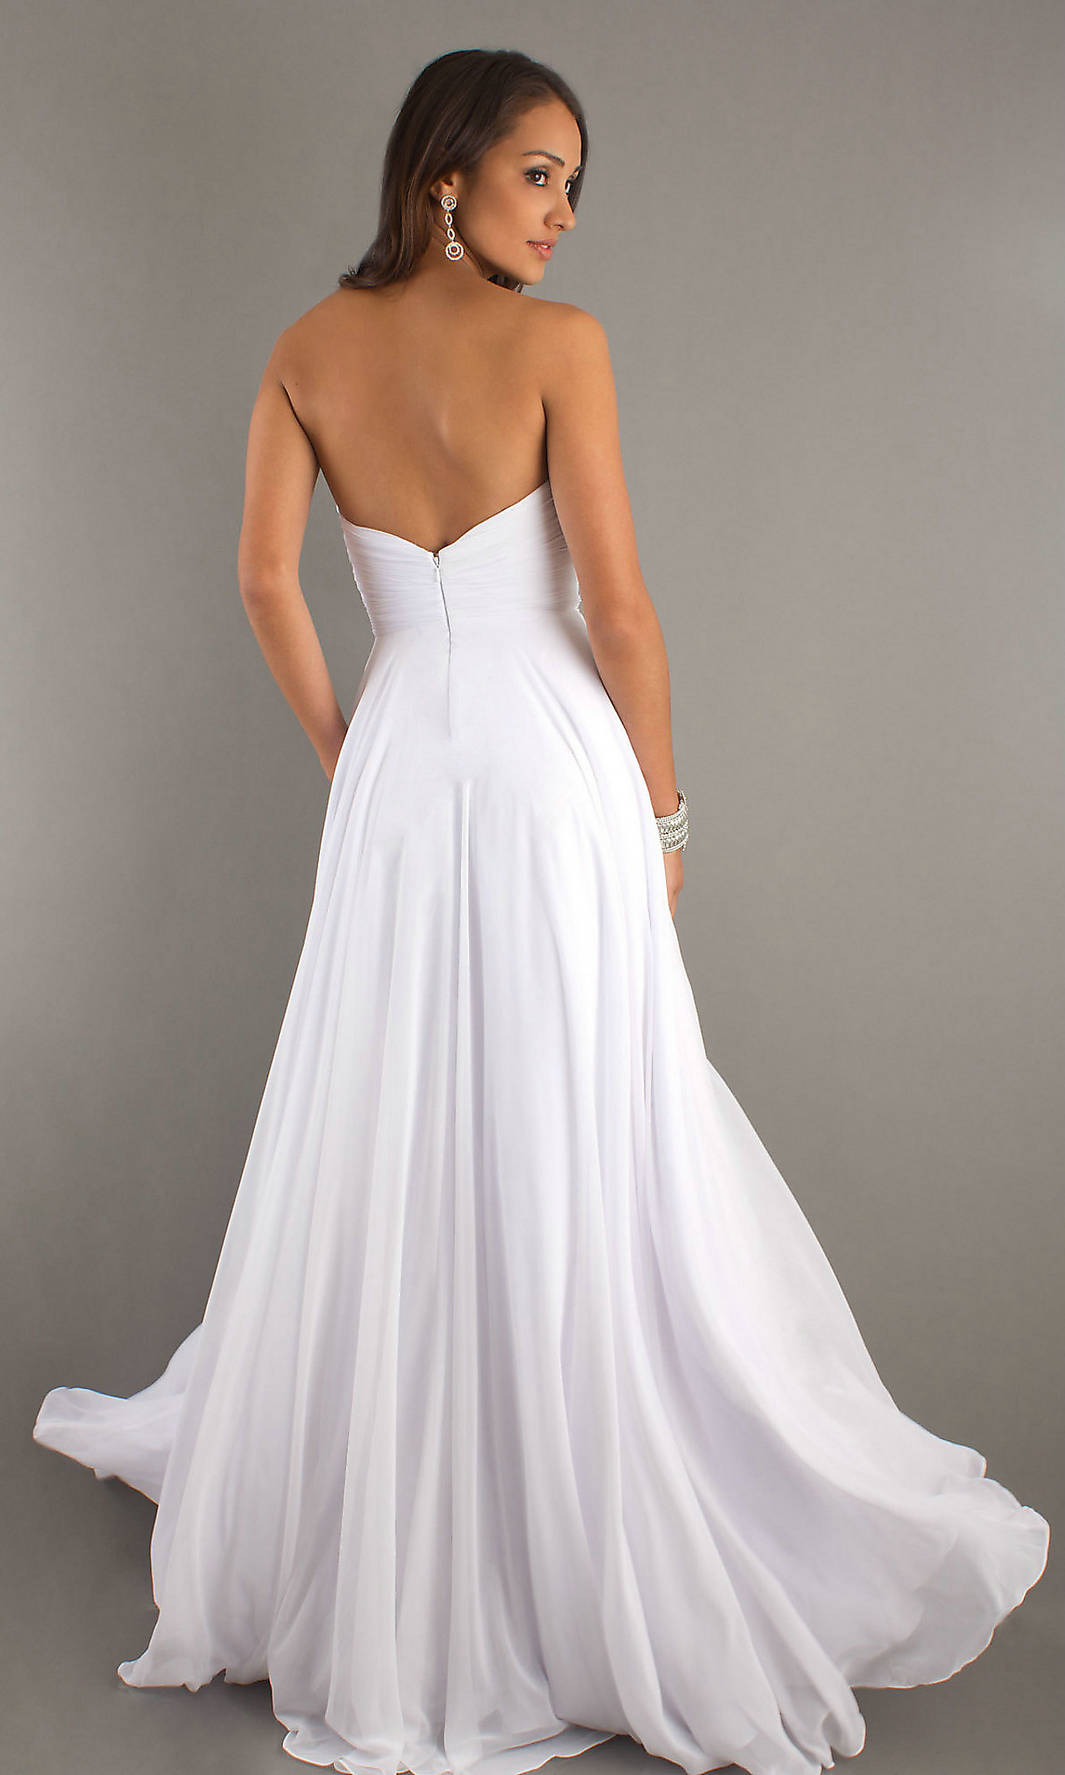 20 Beautiful White Prom Dresses - MagMent